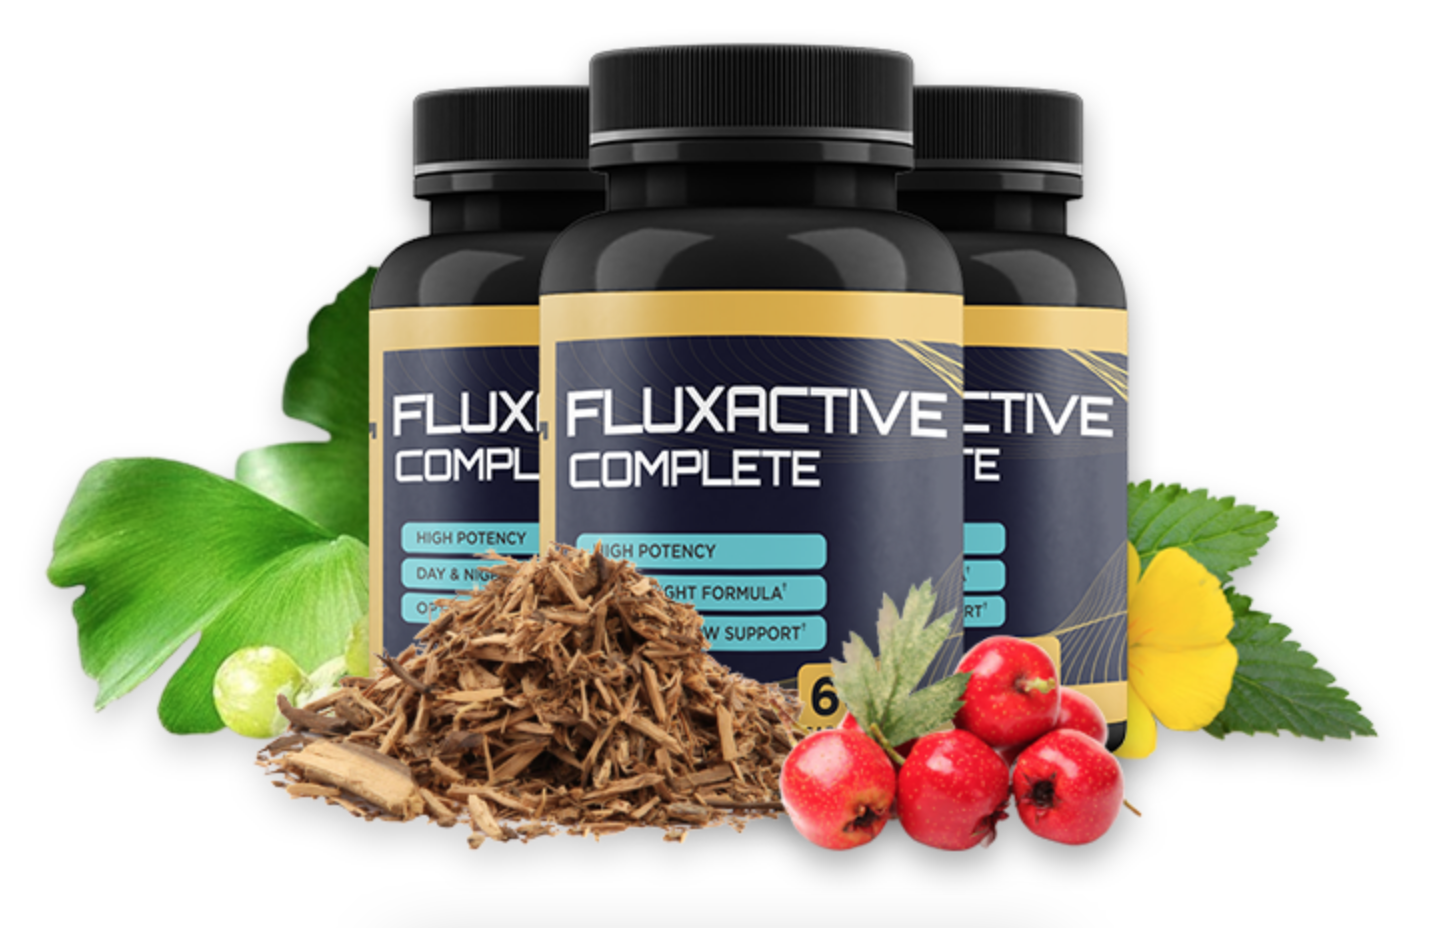 Fluxactive Complete ™ Official Website